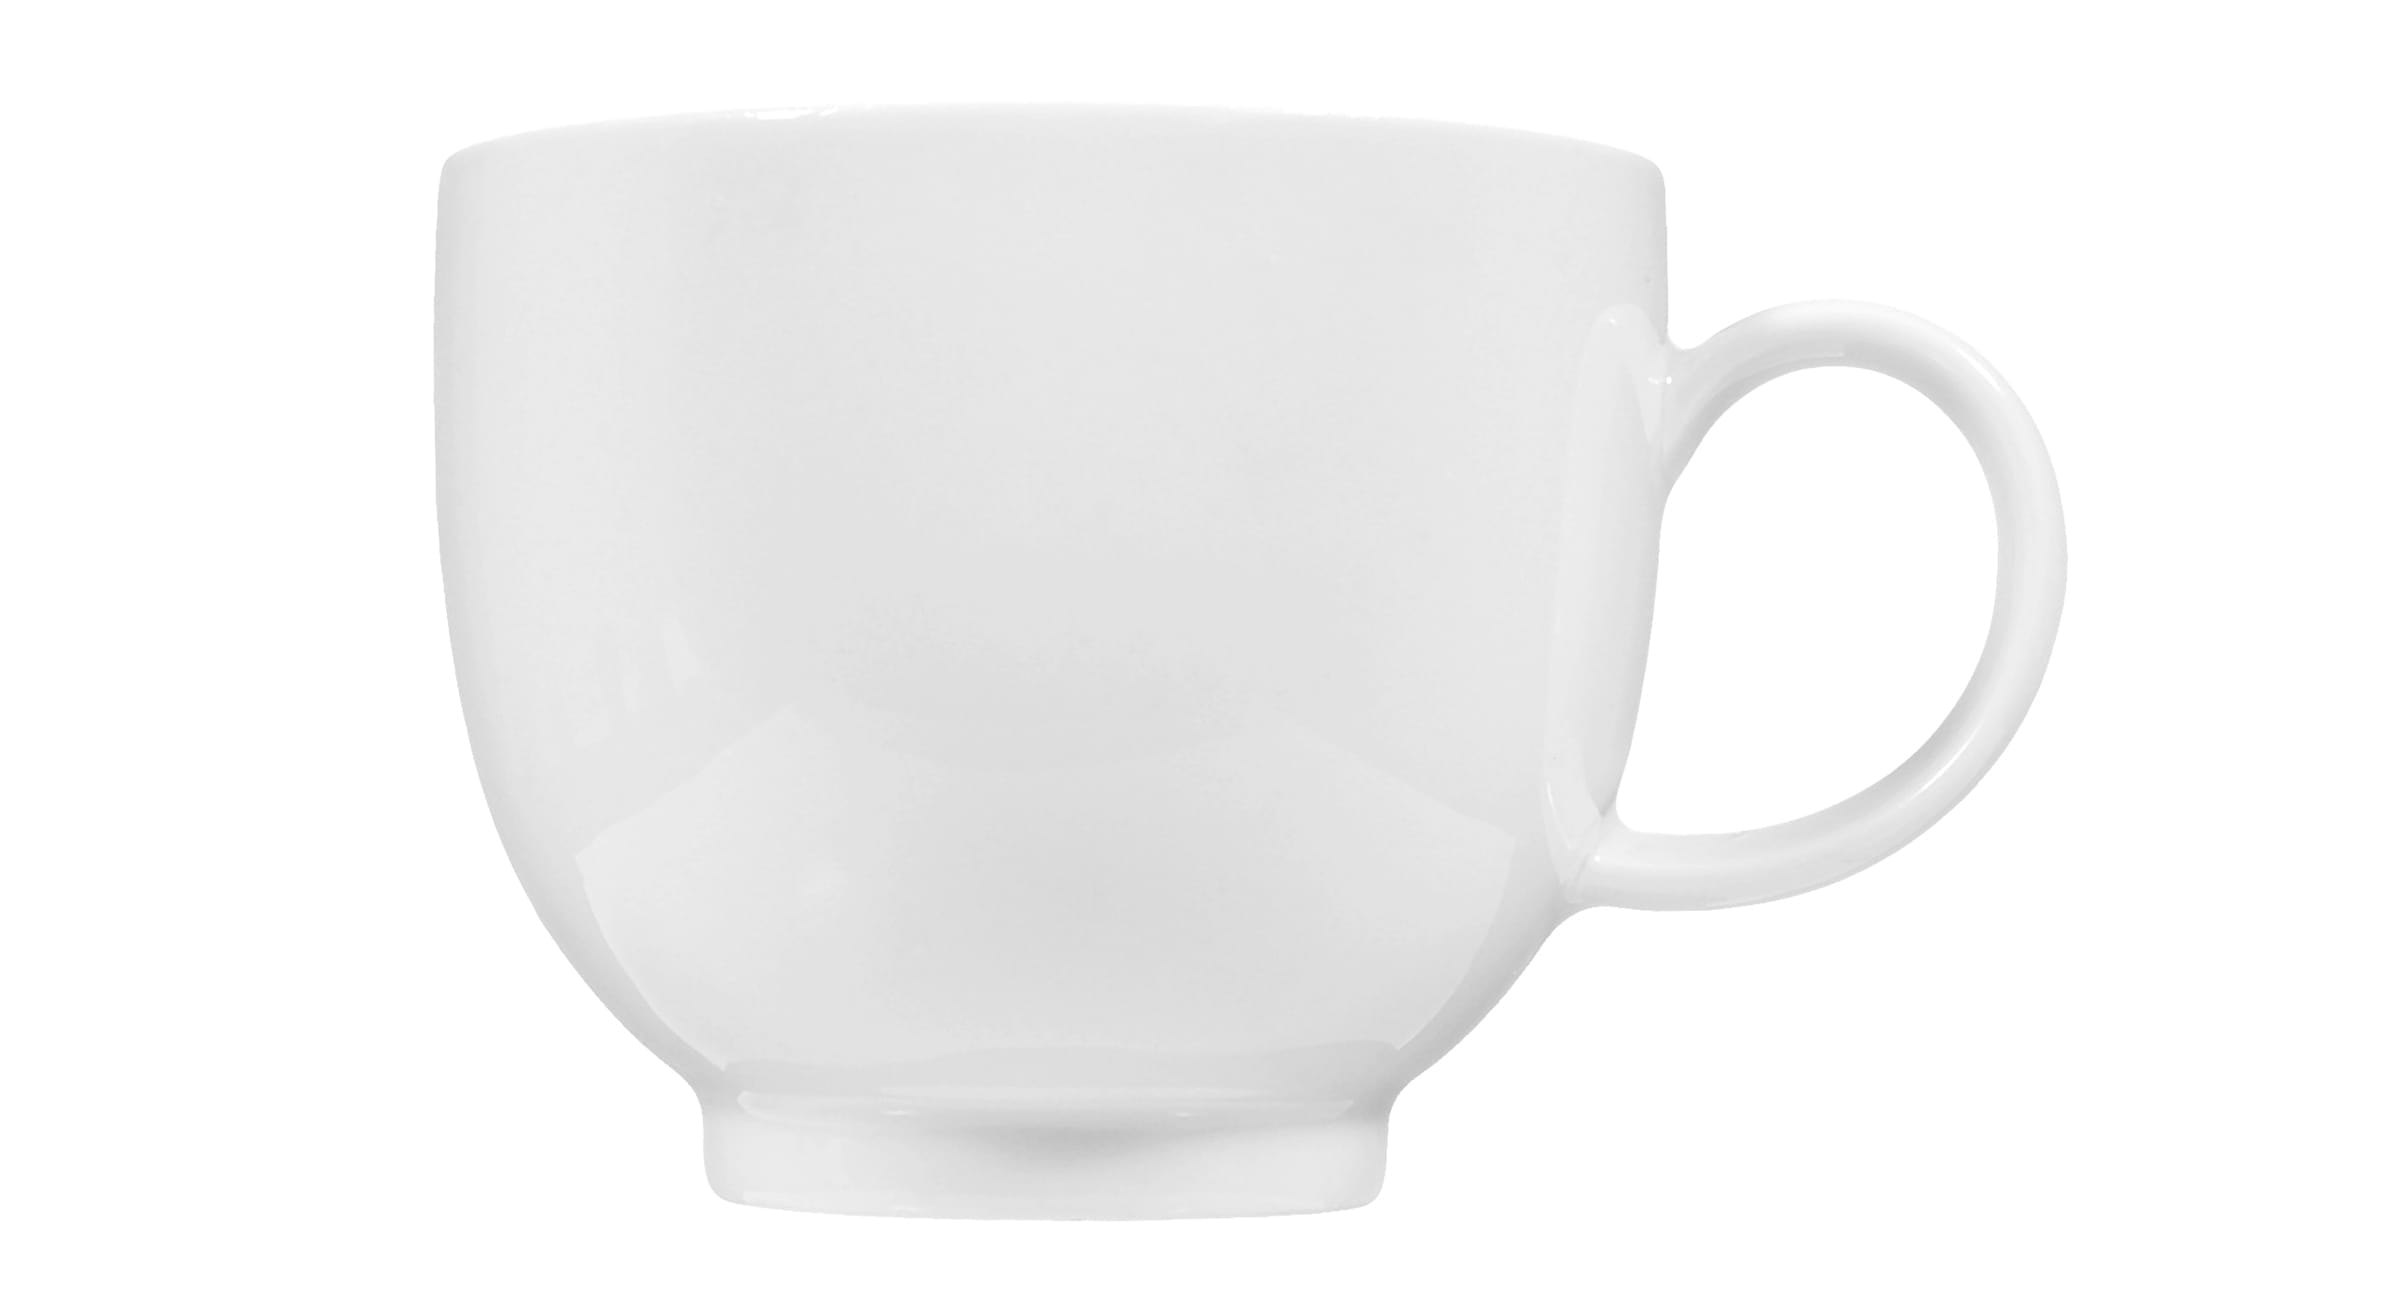 Seltmann Porzellan Lido Weiß uni Kaffeeobertasse 0,22 l